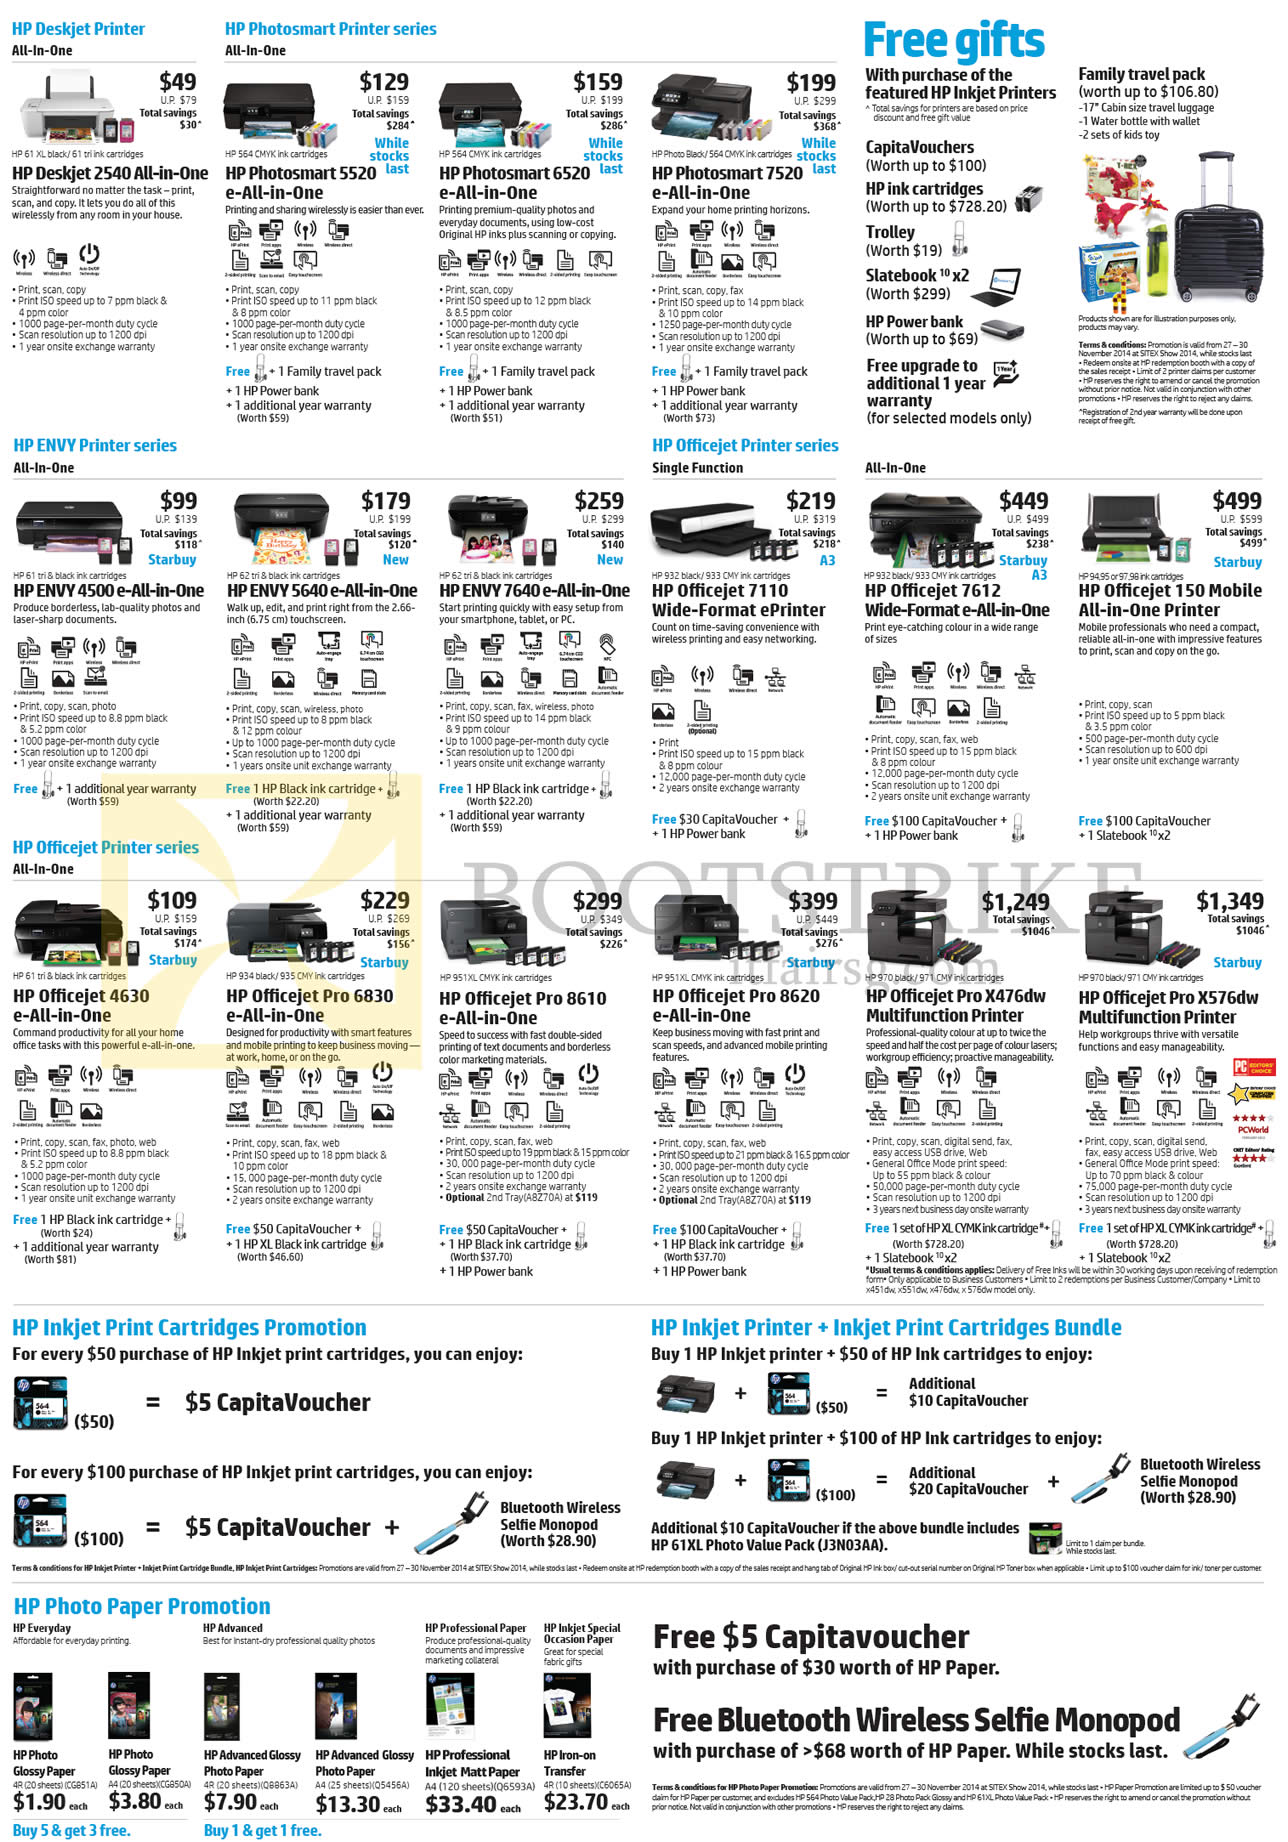 SITEX 2014 price list image brochure of HP Printers Deskjet 2540, Photosmart 5520, 6520, 7520, ENVY 4500, 5640, 7640, Officejet 7110, 7612, 150, 4630, 6830, 8610, X476dw, X576dw